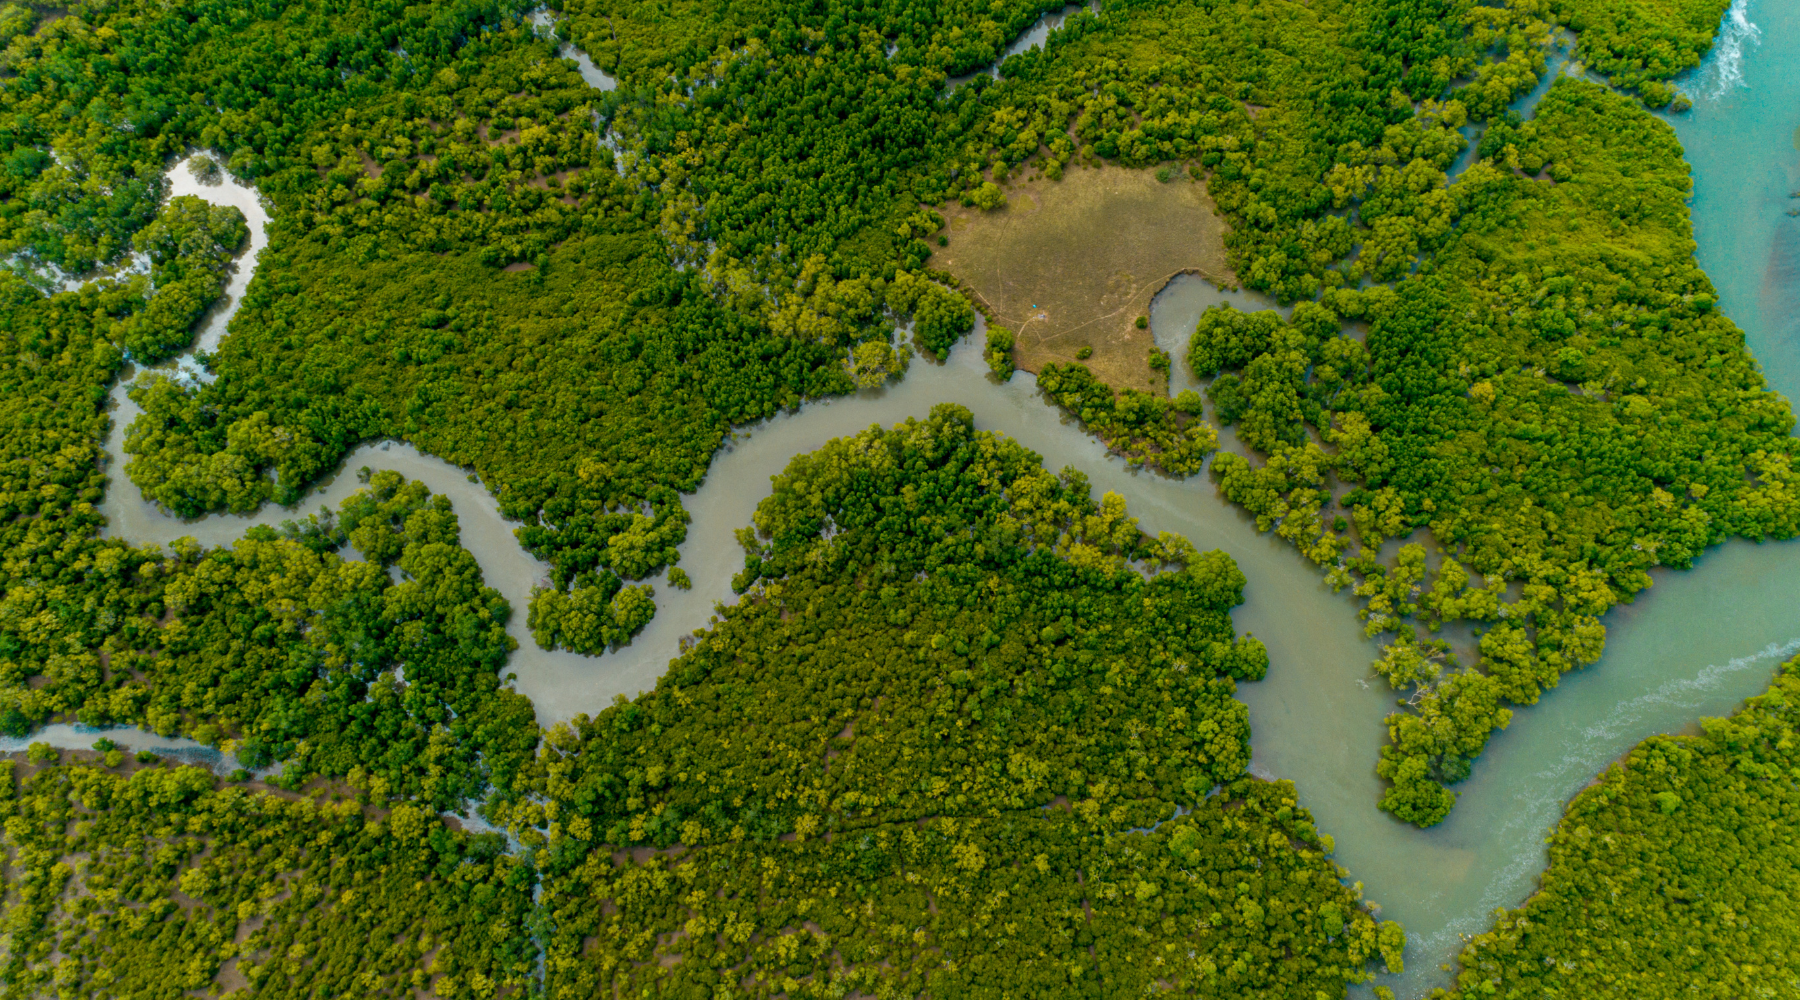 Wetland facts - mangrove swamp